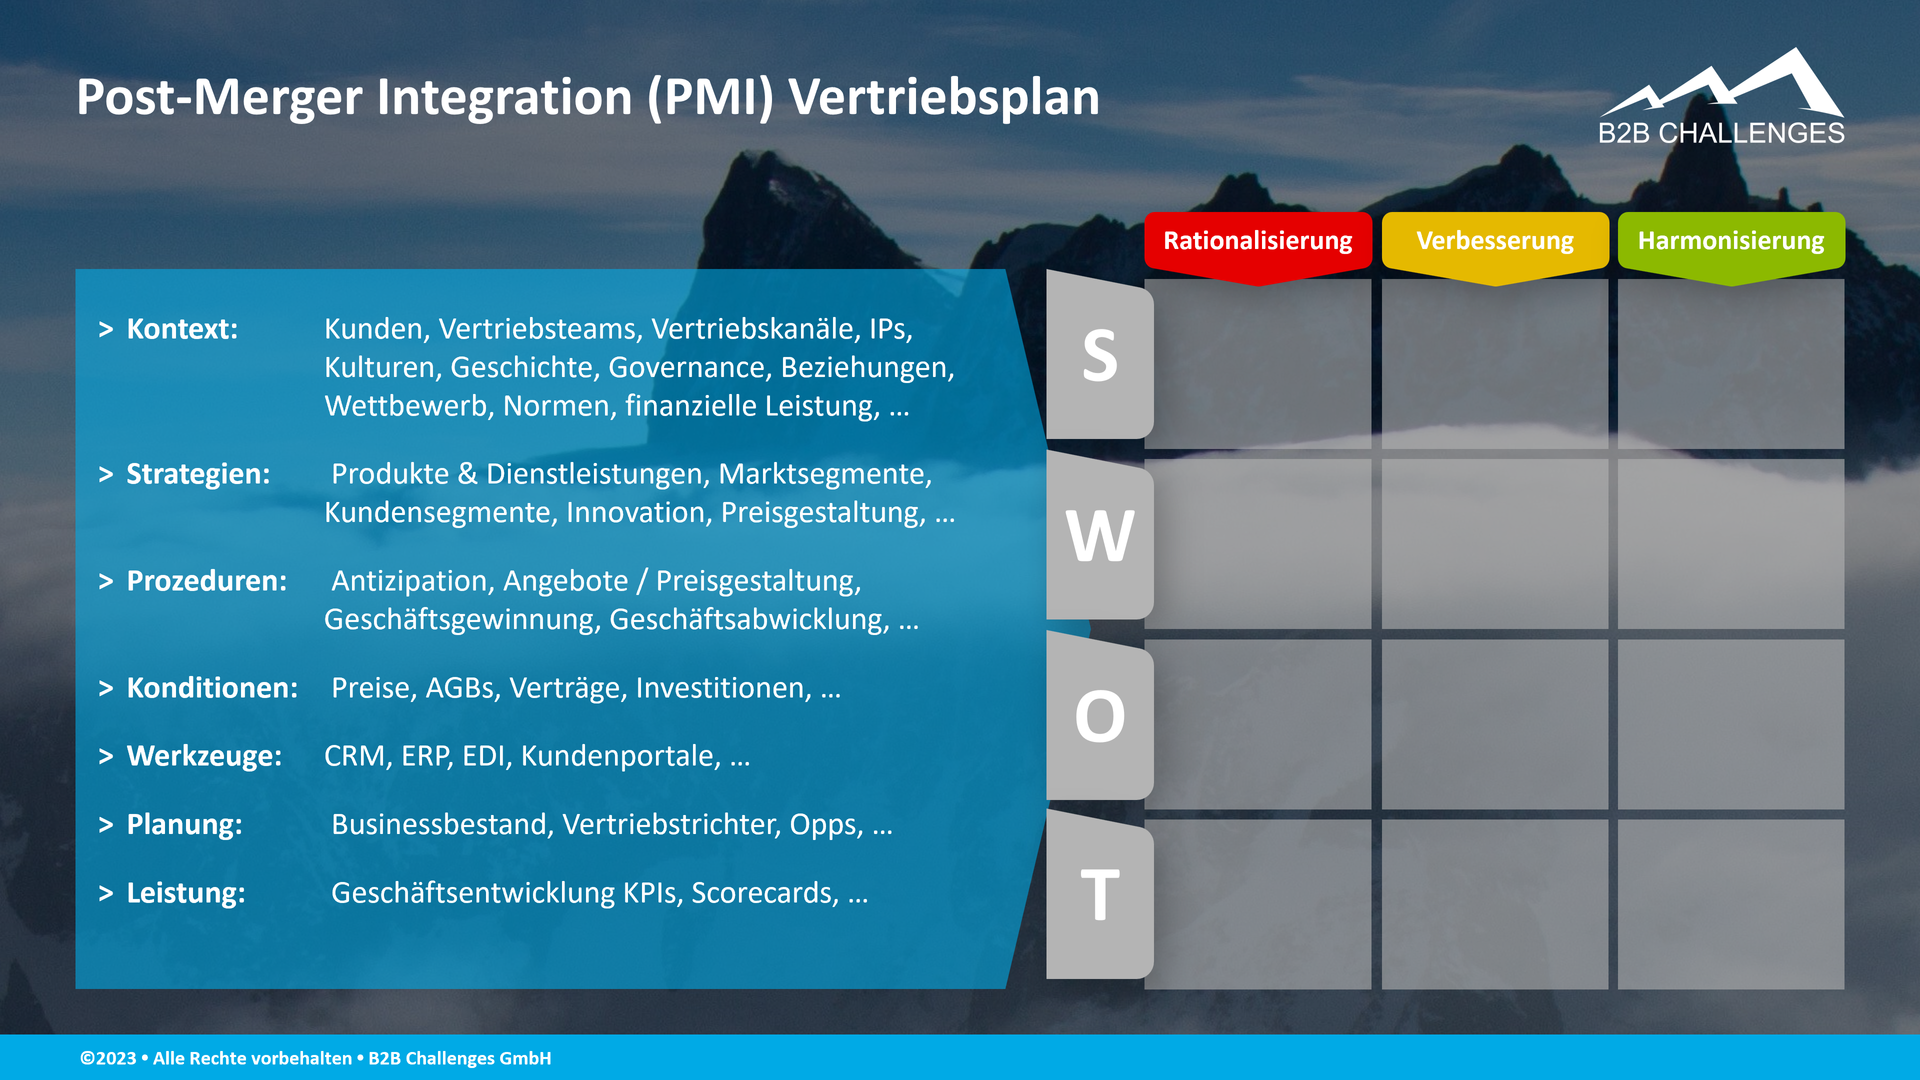 Post-Merger Integration (PMI) Vertriebsplan (Serge Megazzini - B2B Challenges GmbH)